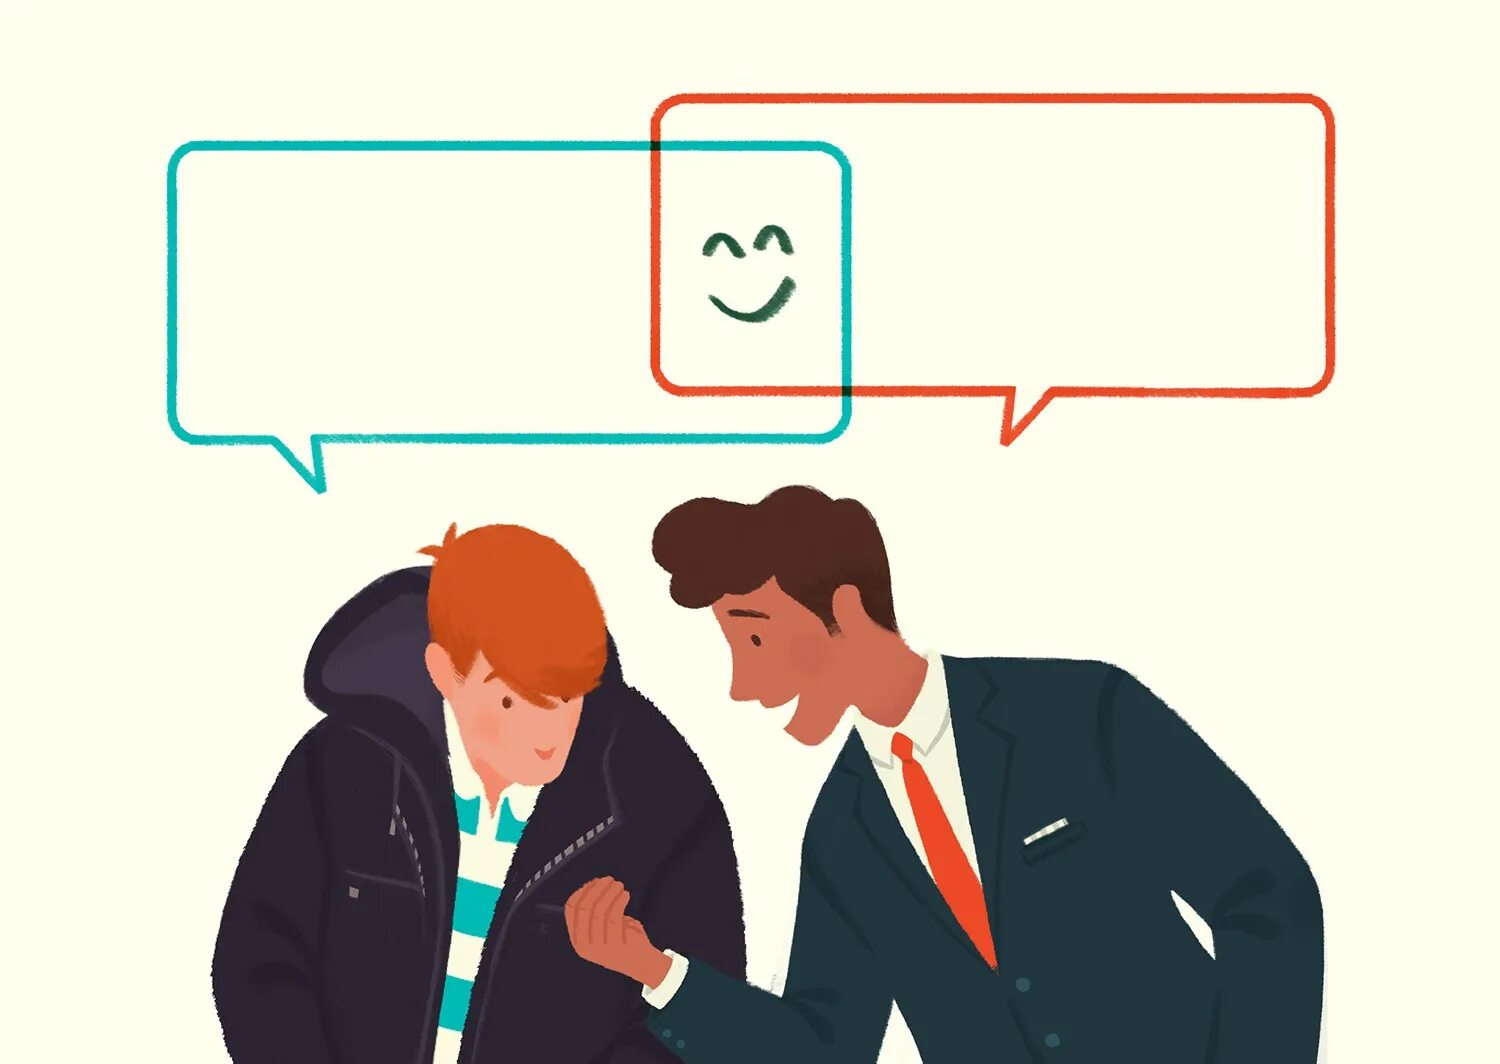 Разговор иллюстрация. Техники малого разговора. UX иллюстрации разговор. Small talk в бизнес-коммуникации.